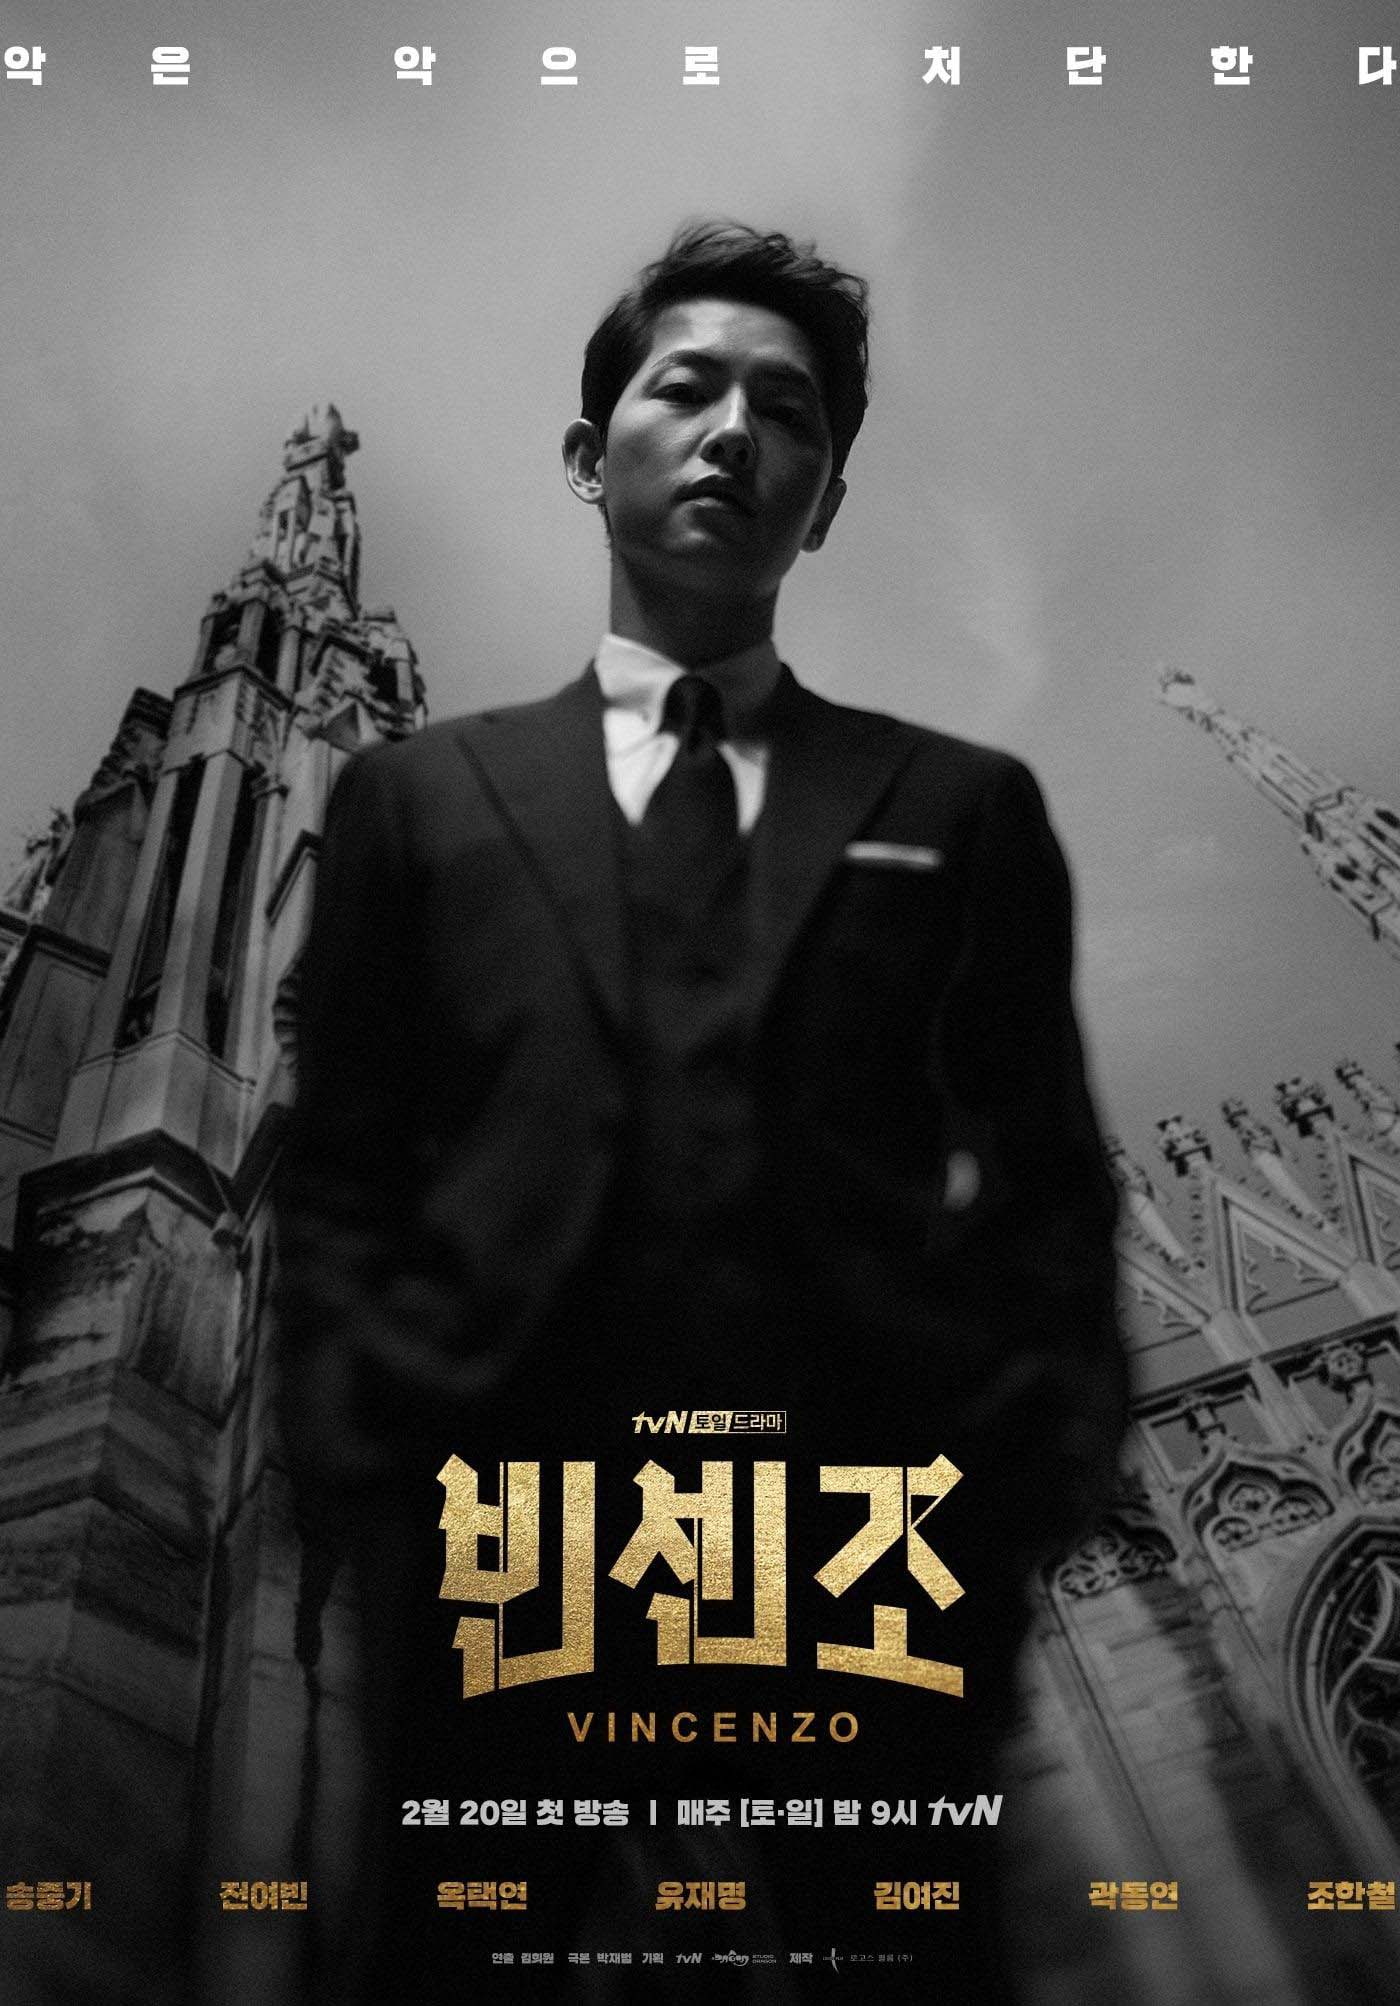 phim vincenzo elle man 4 1 Review phim Vincenzo: Thâm nhập thế giới mafia Hàn Quốc | ELLE Man